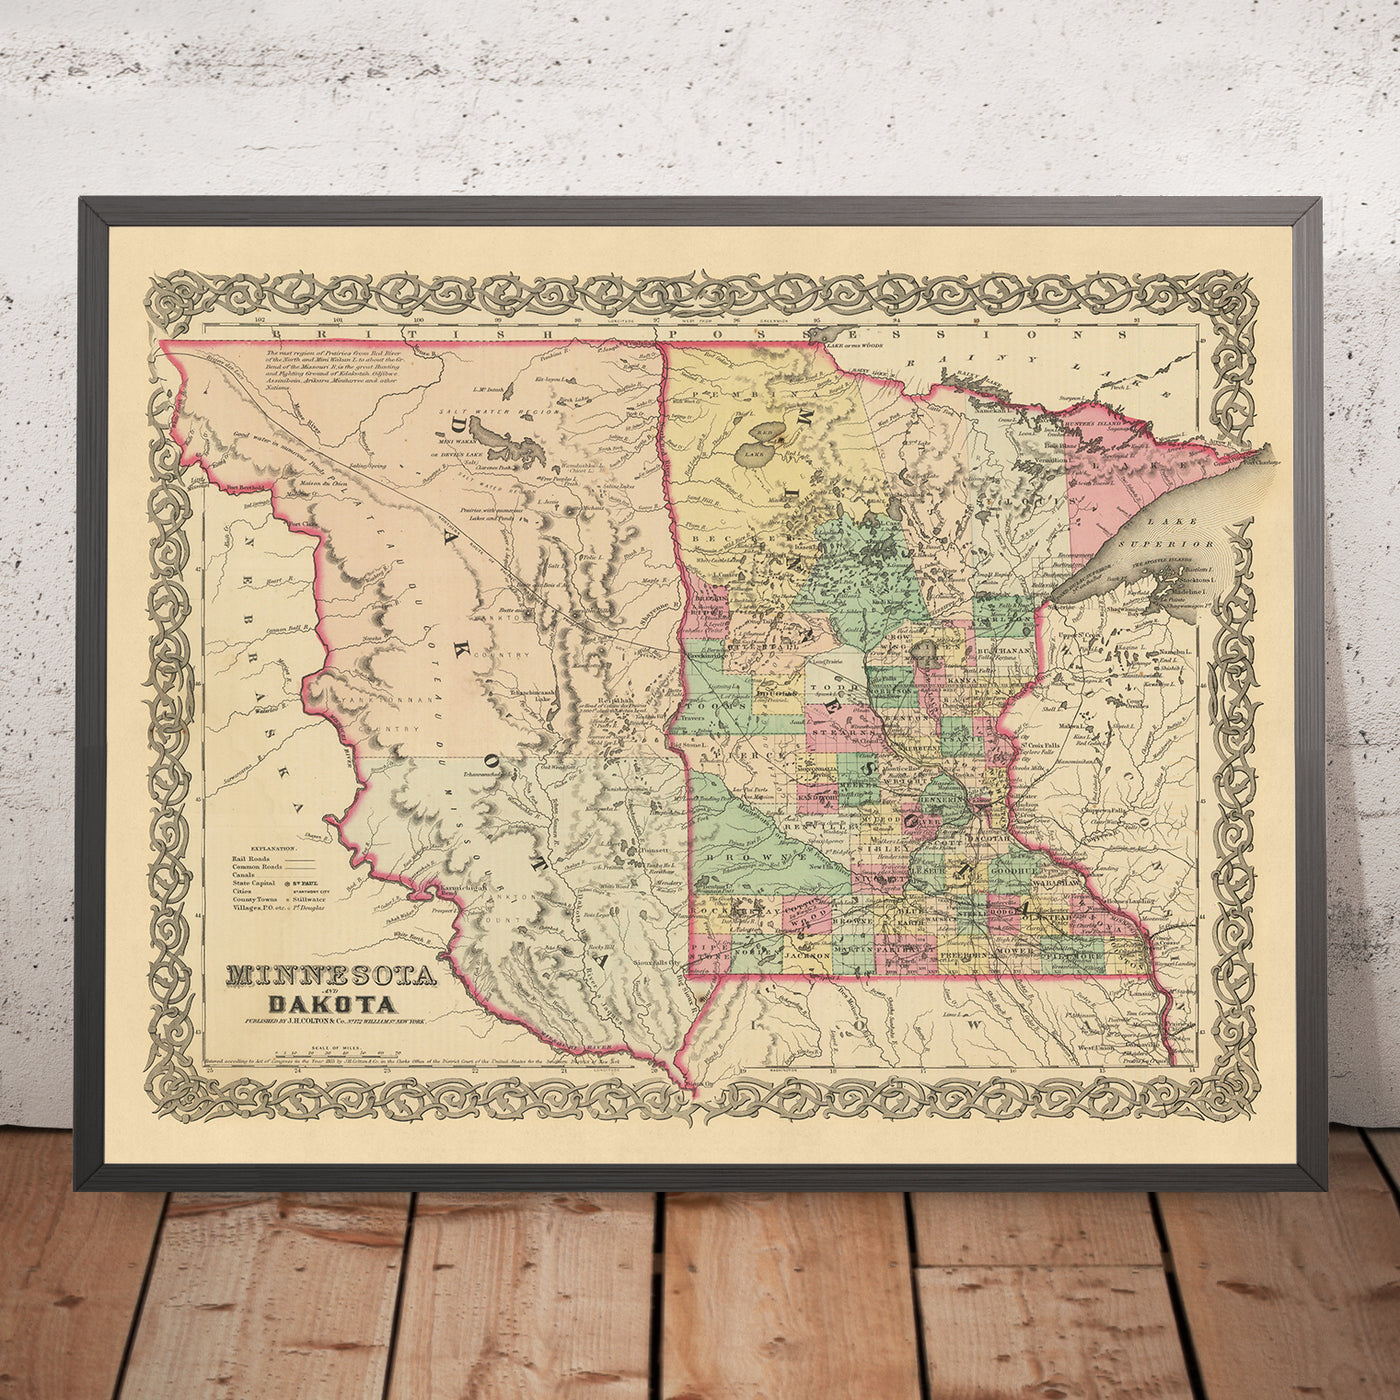 Old map of Minnesota & Dakota by Colton, 1860: St. Paul, Minneapolis, St. Anthony, Mendota, and Pembina